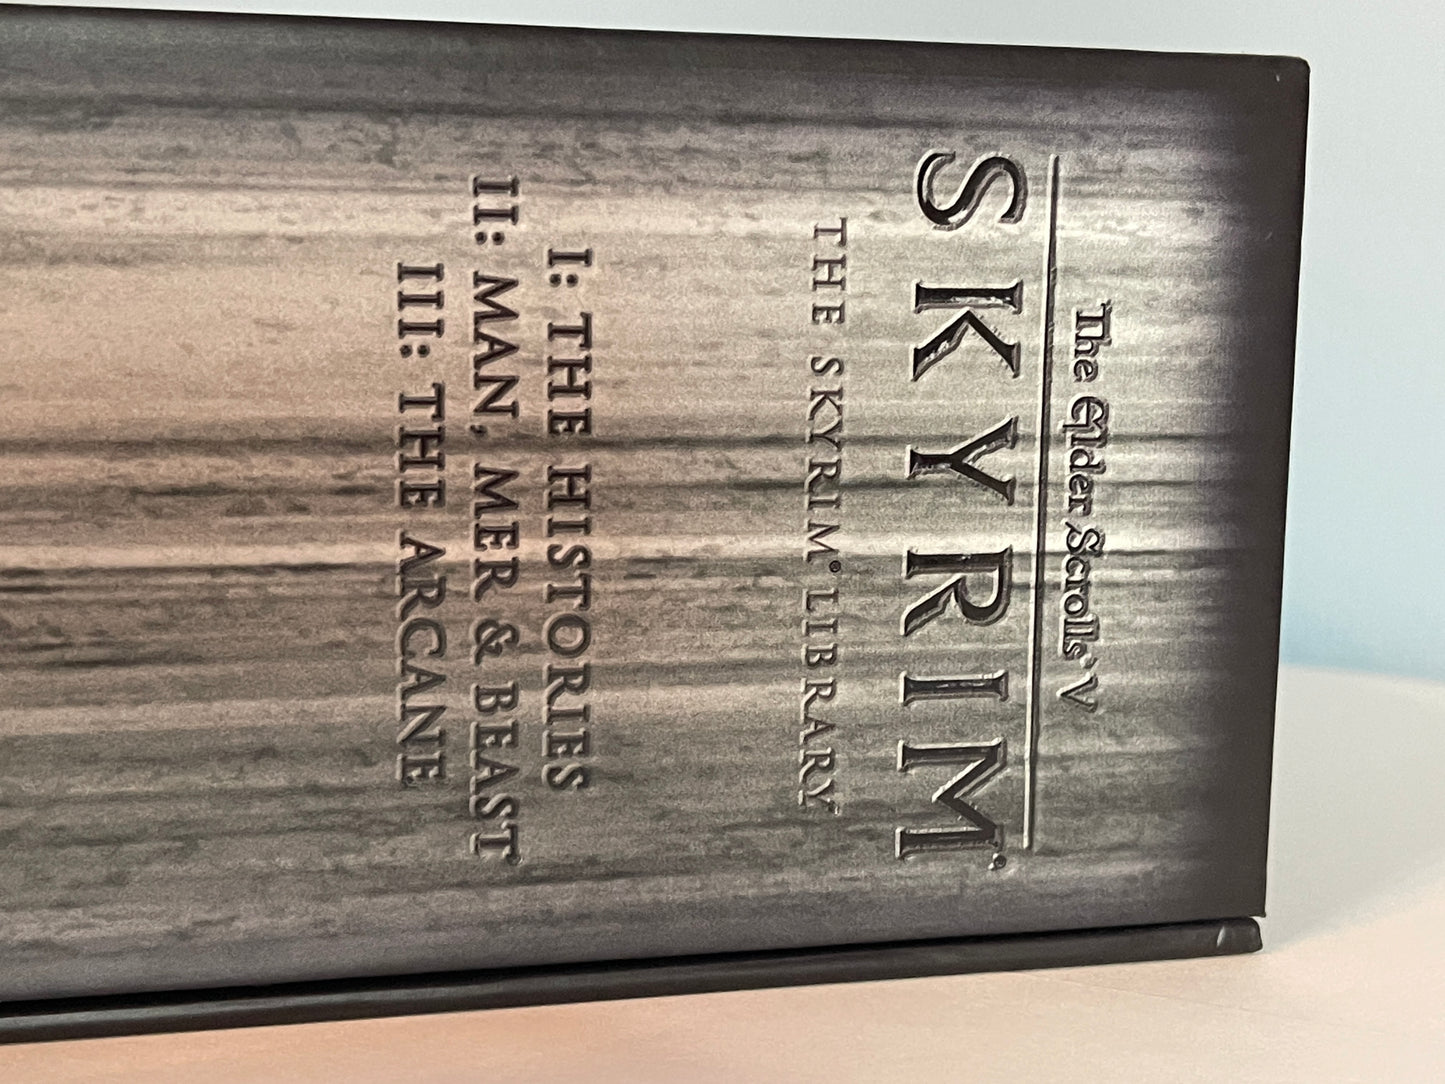 Skyrim The Elder Scrolls V Book Set Case 3 Three Books